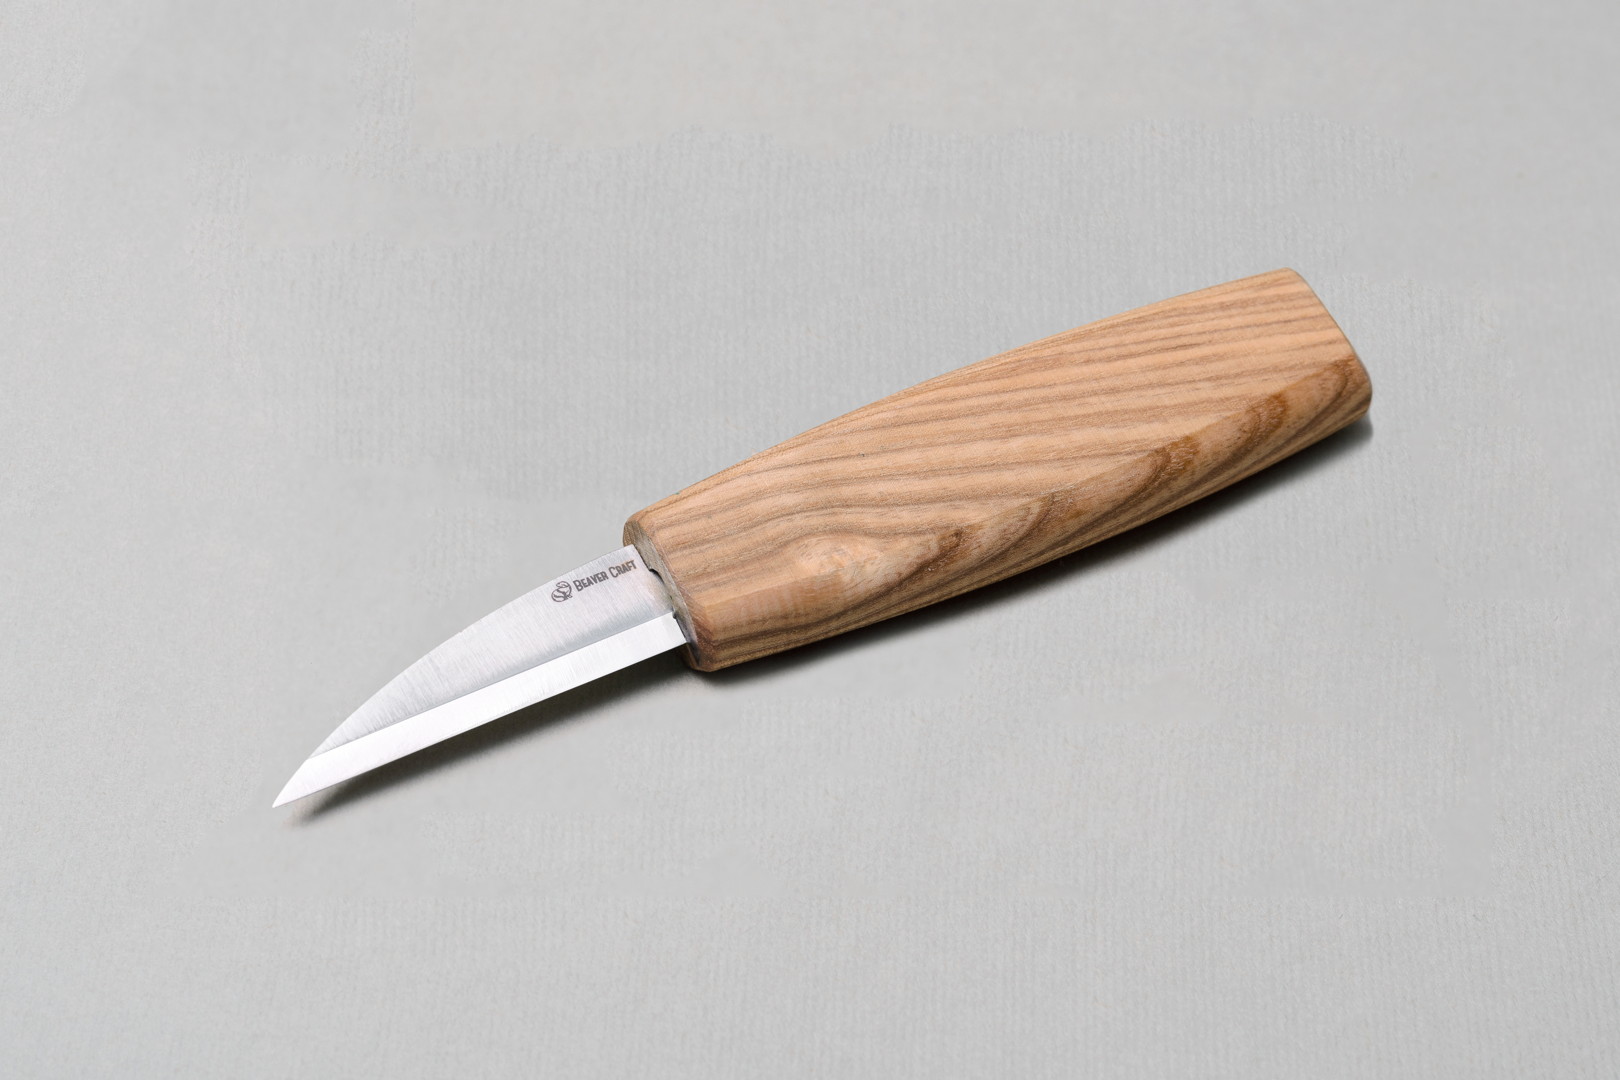 BeaverCraft C14 - Whittling Knife fafaragó kés